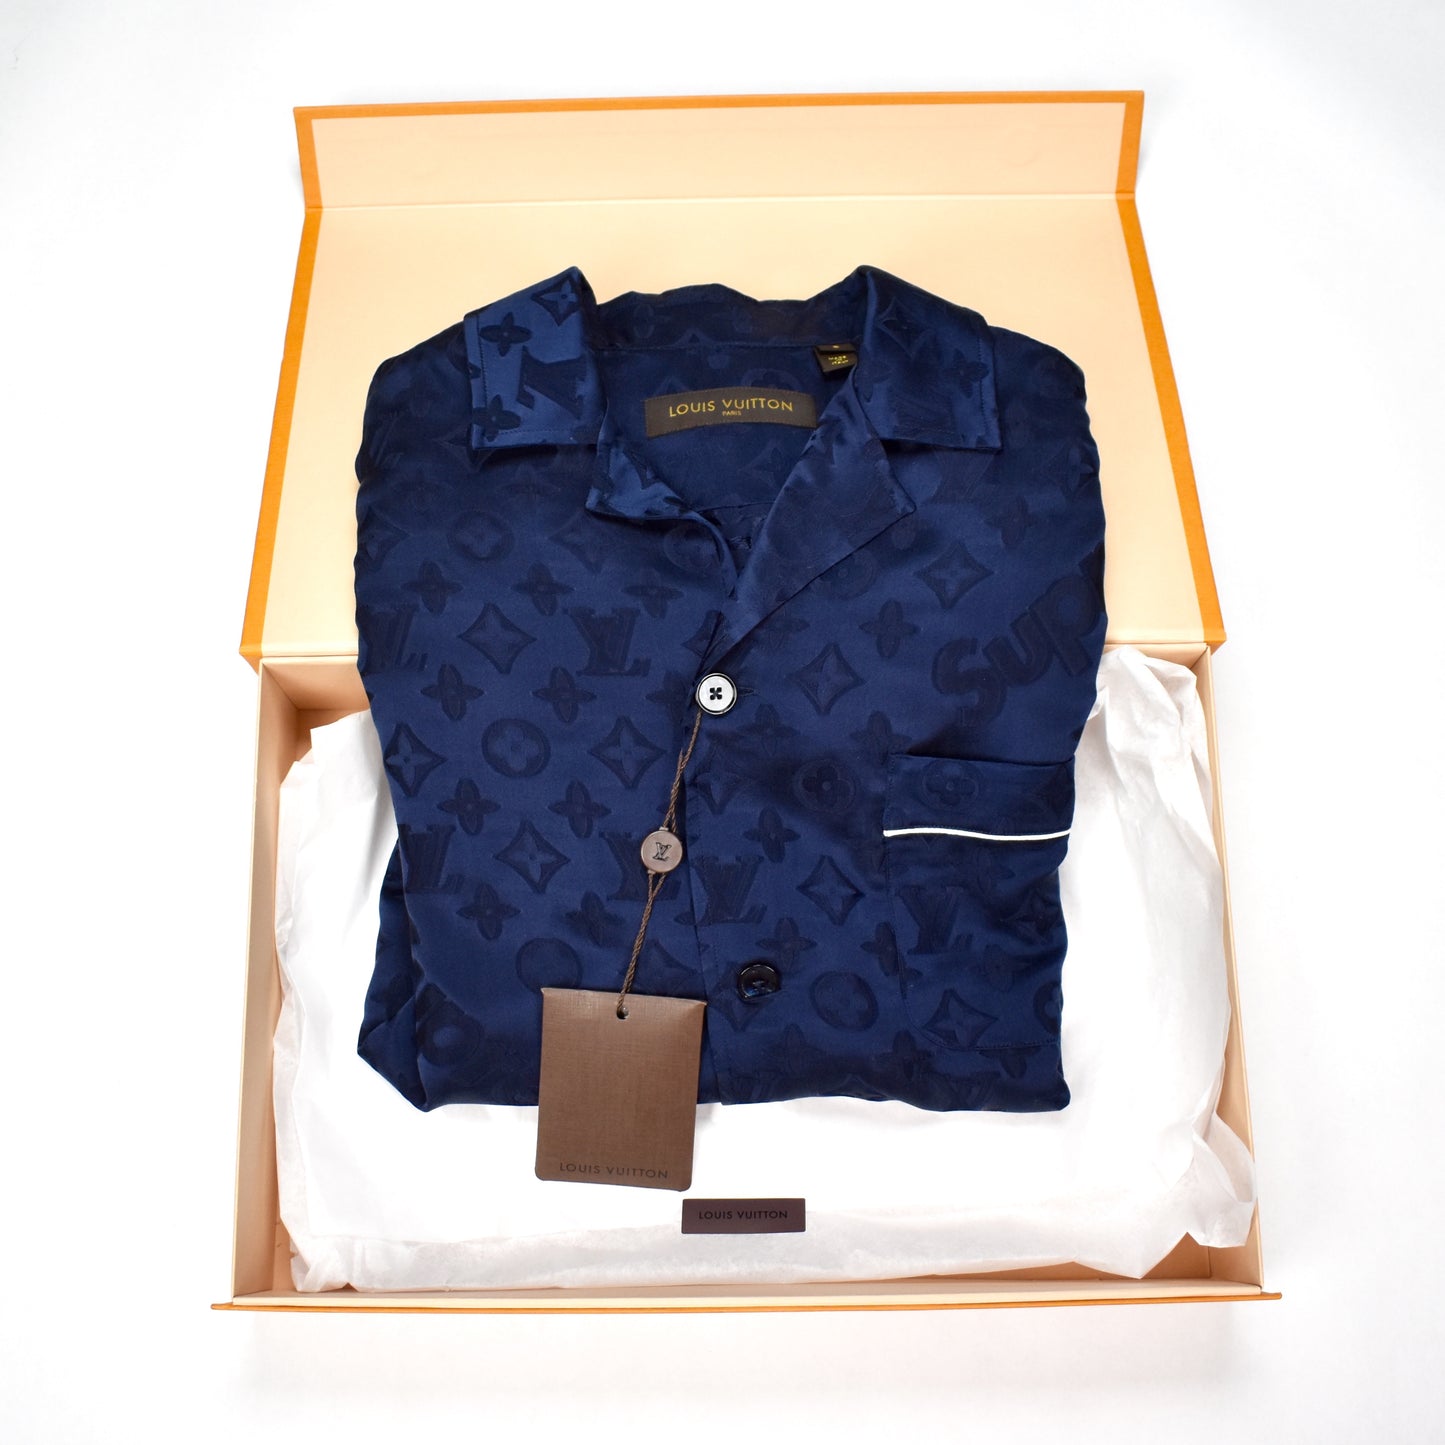 Louis Vuitton Supreme Limited Edition Pyjama Top